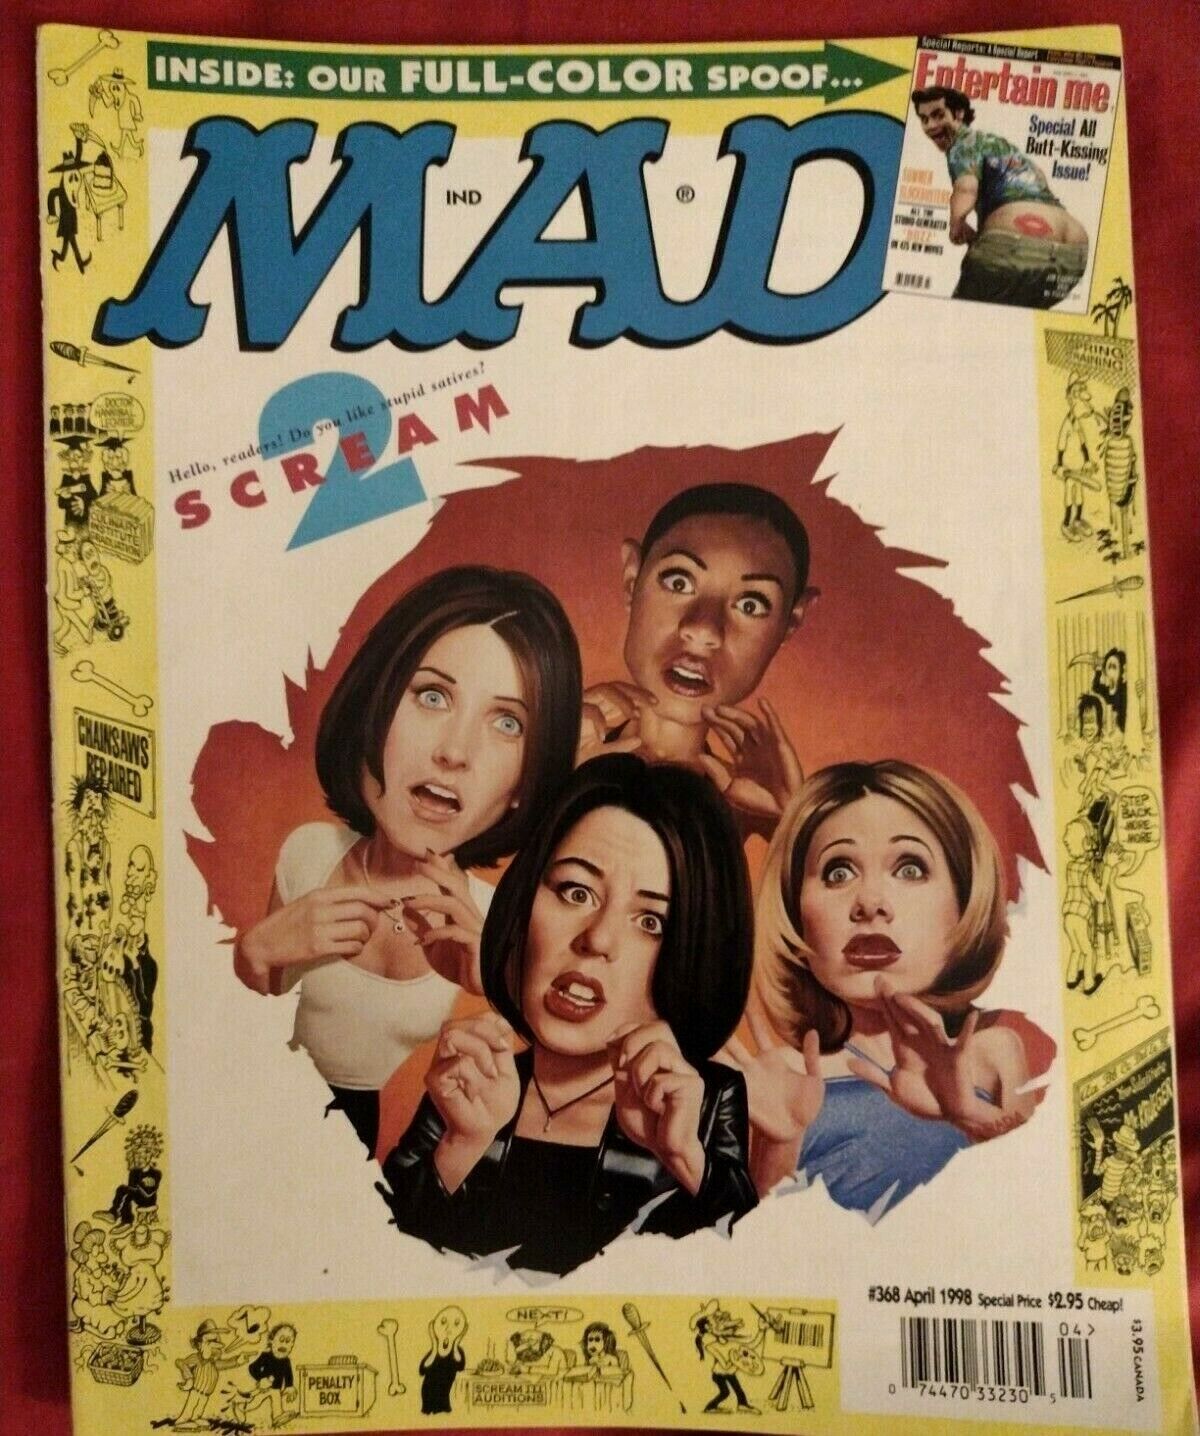 MAD MAGAZINE #368 Scream 2 Cover, Latrell Sprewell, Entertain Me Insert   BAGGED